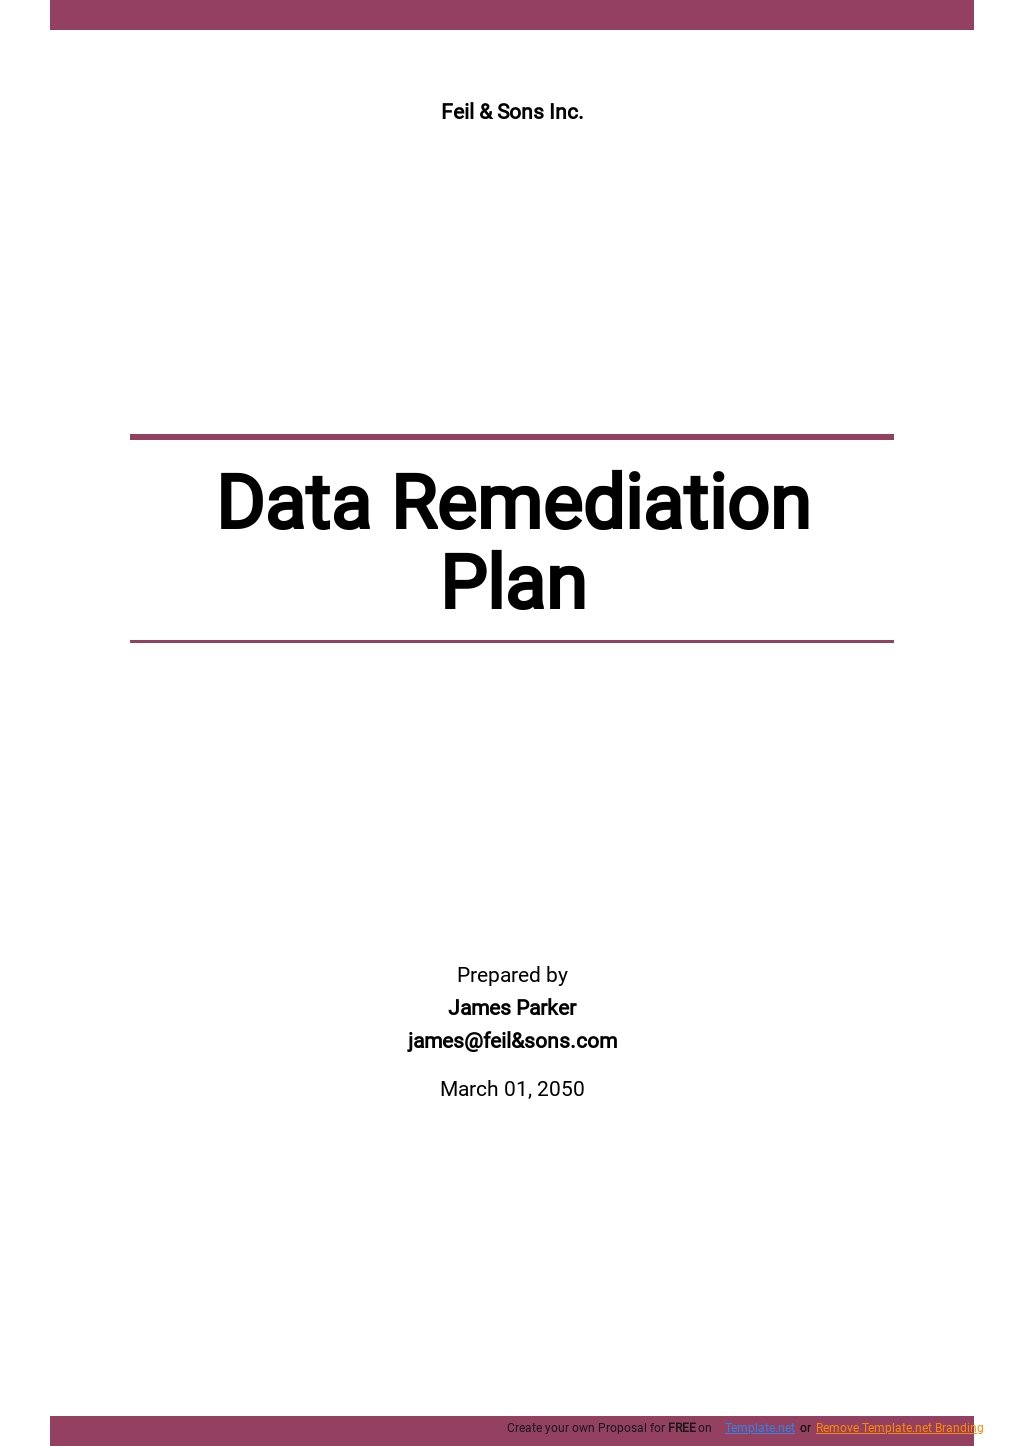 Data Remediation Plan Template